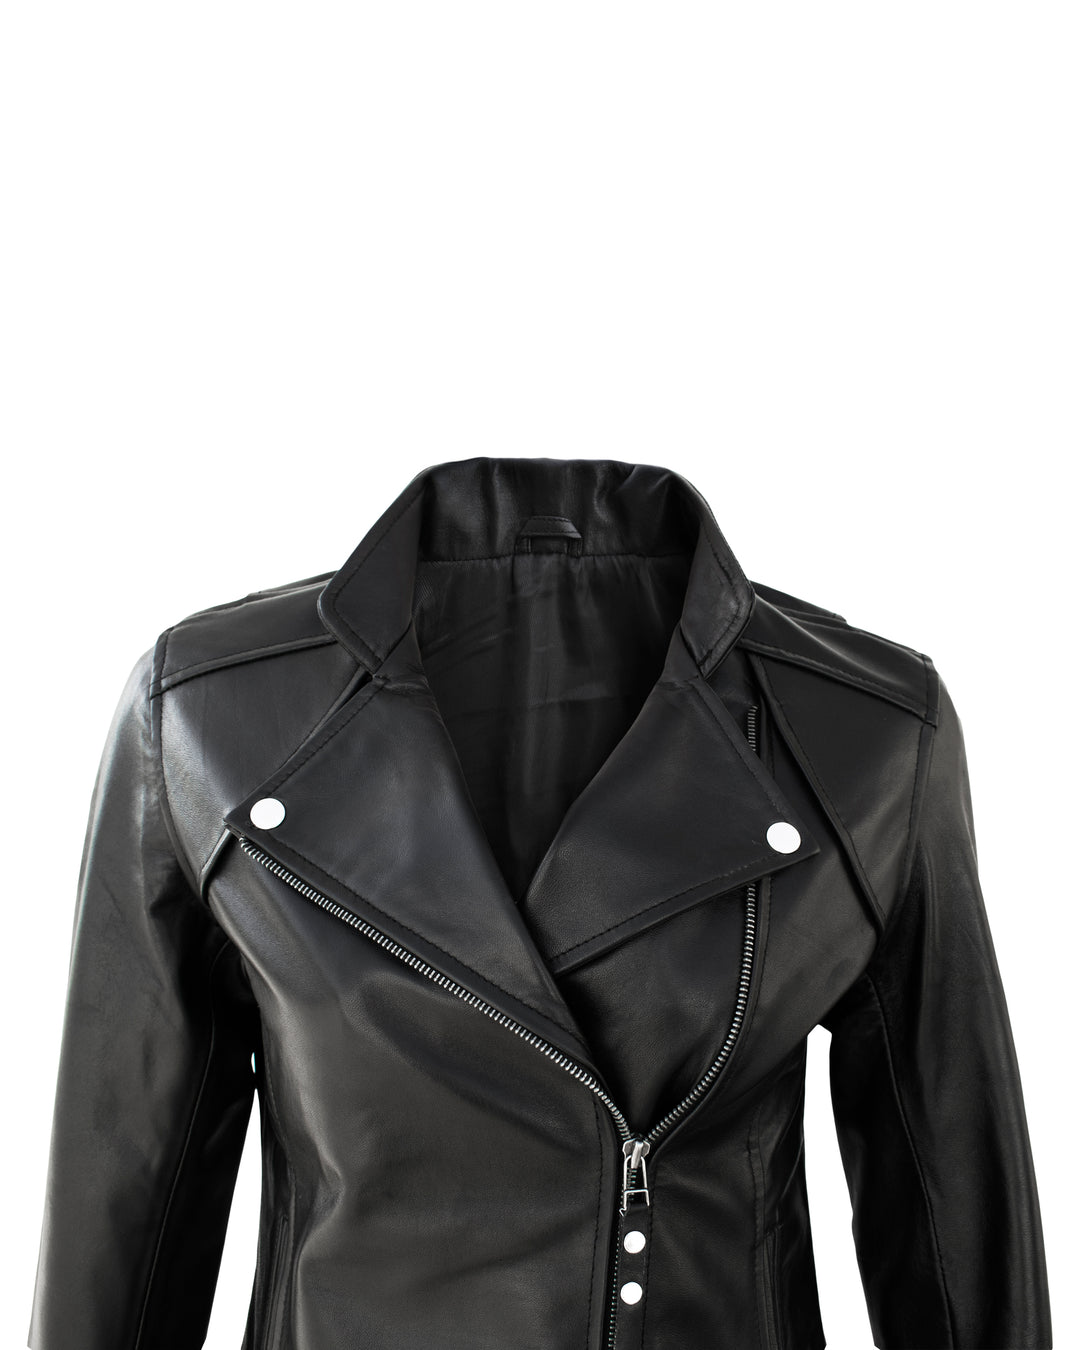 Black Biker Leather Jacket Australia